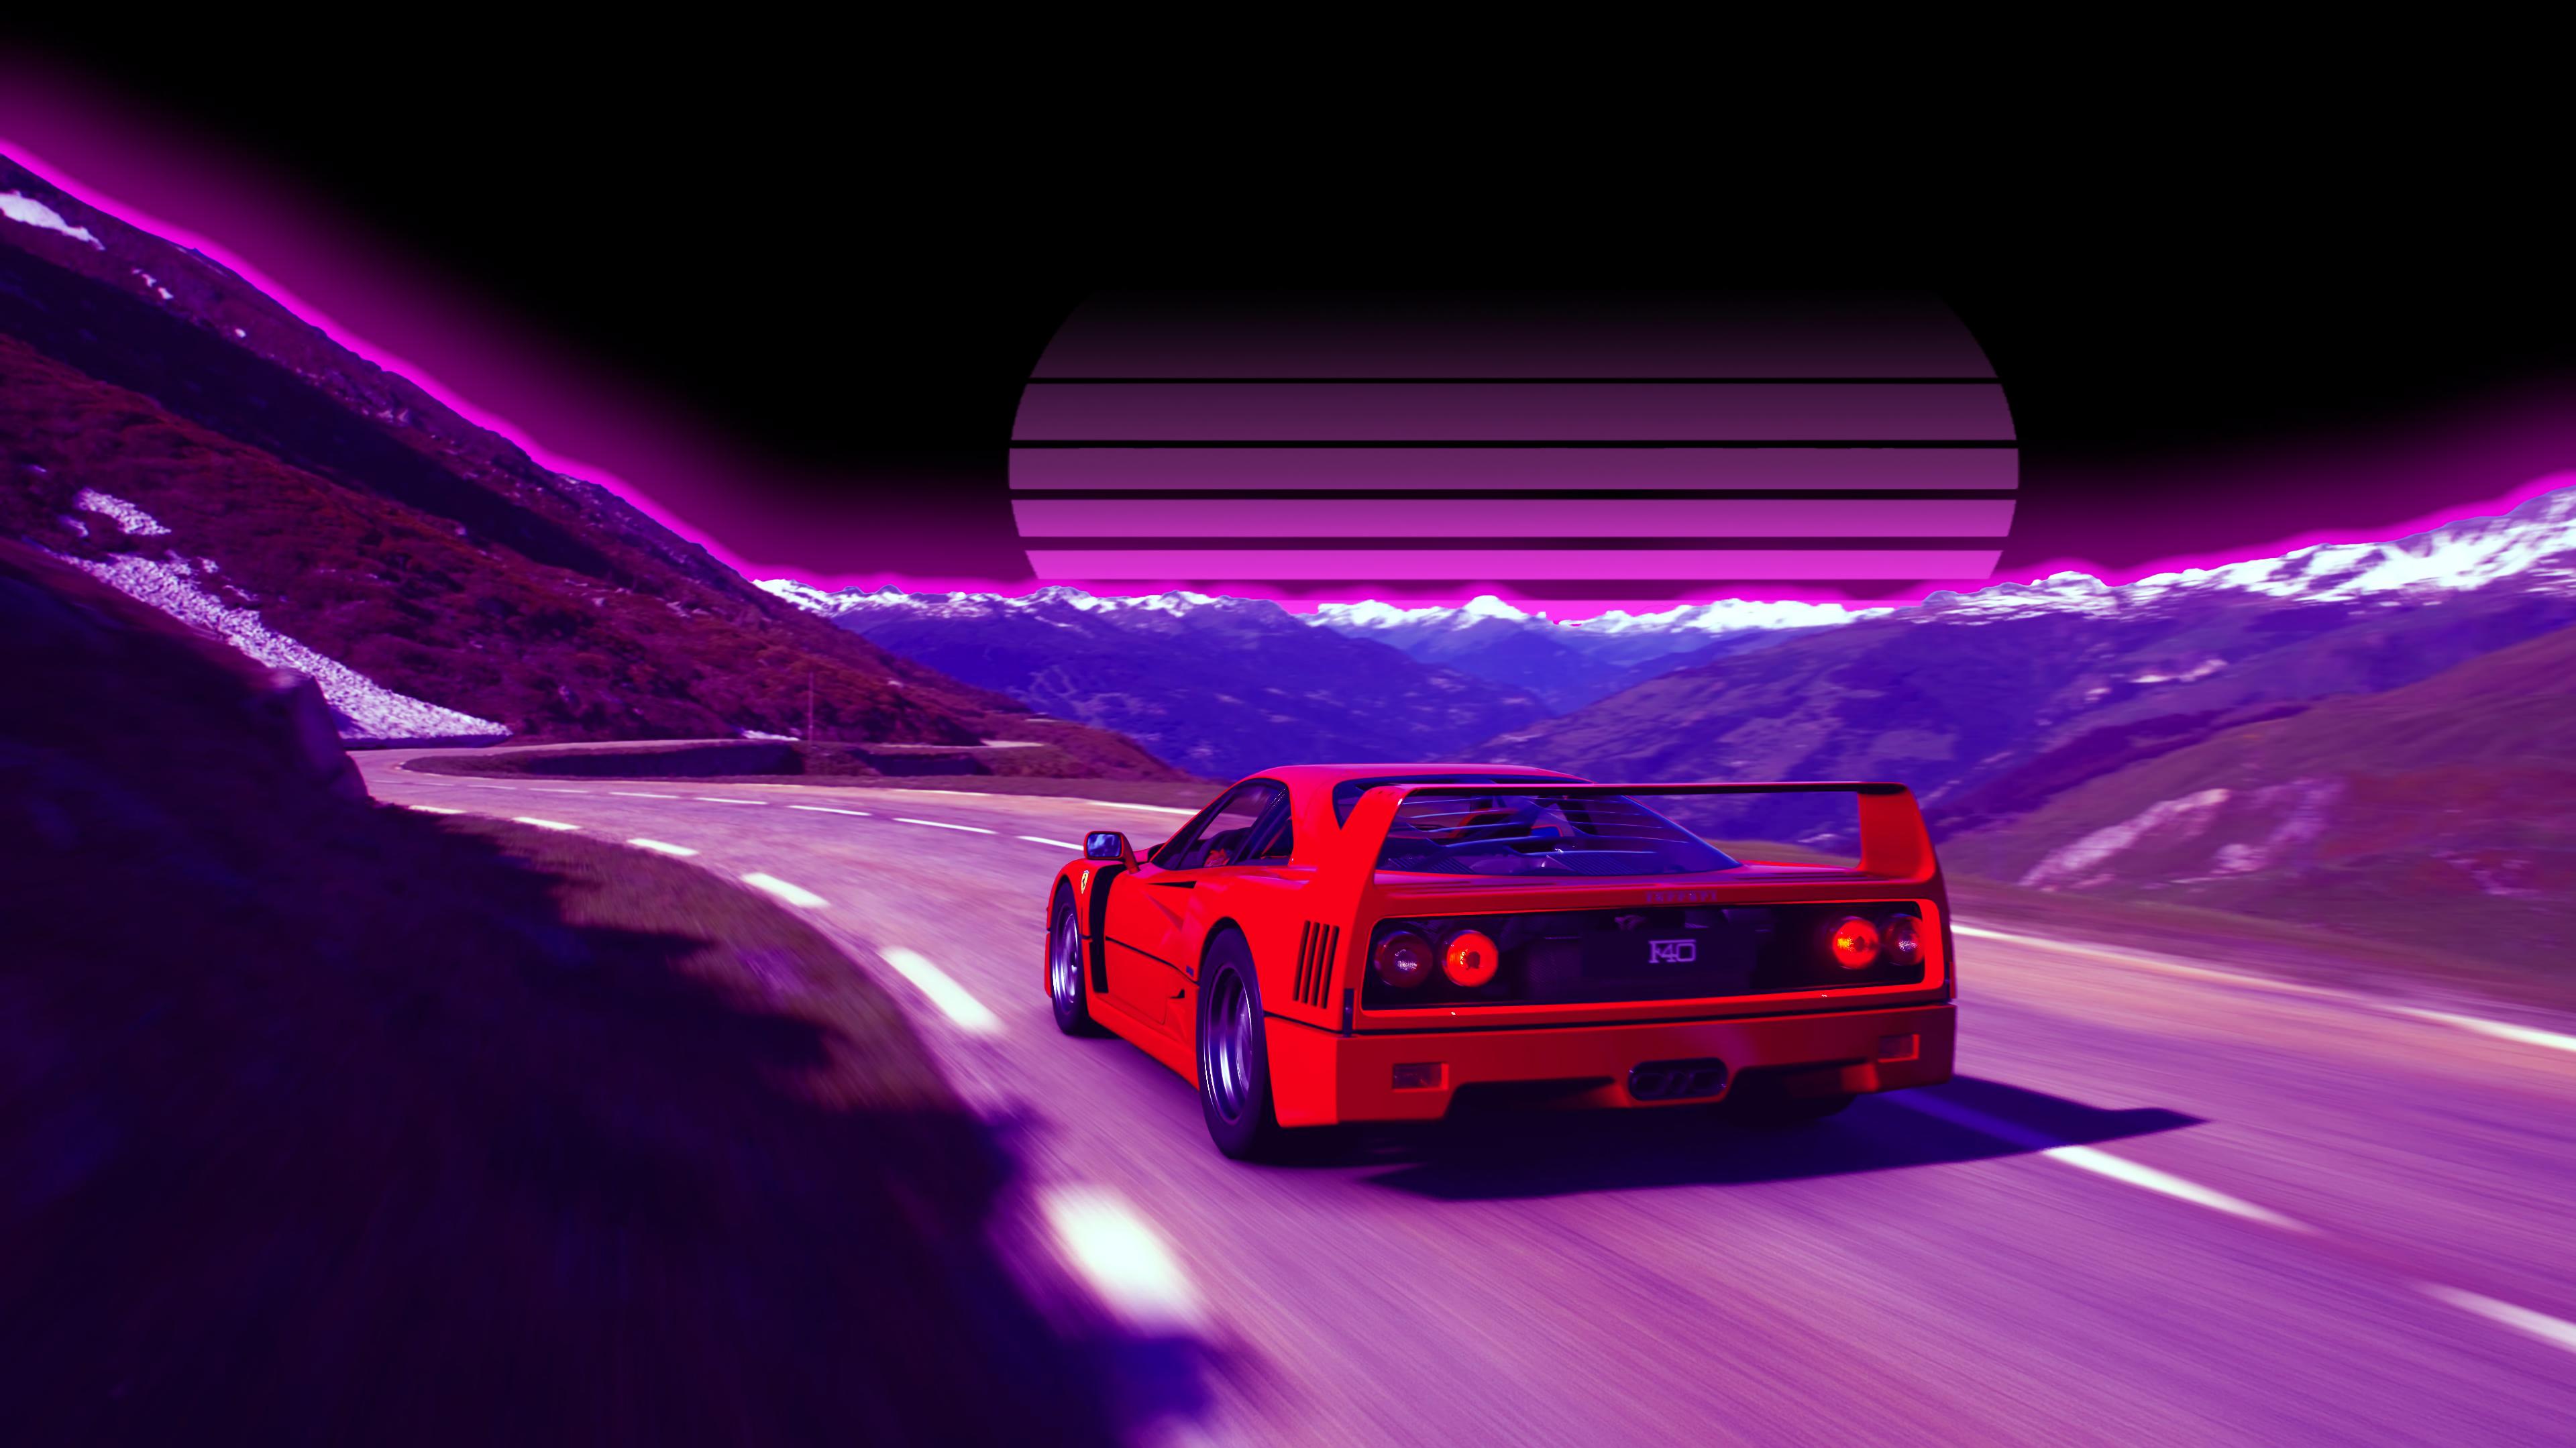 Ferrari F40 Sports Car Outrun Digital Art HD 4k Wallpaper